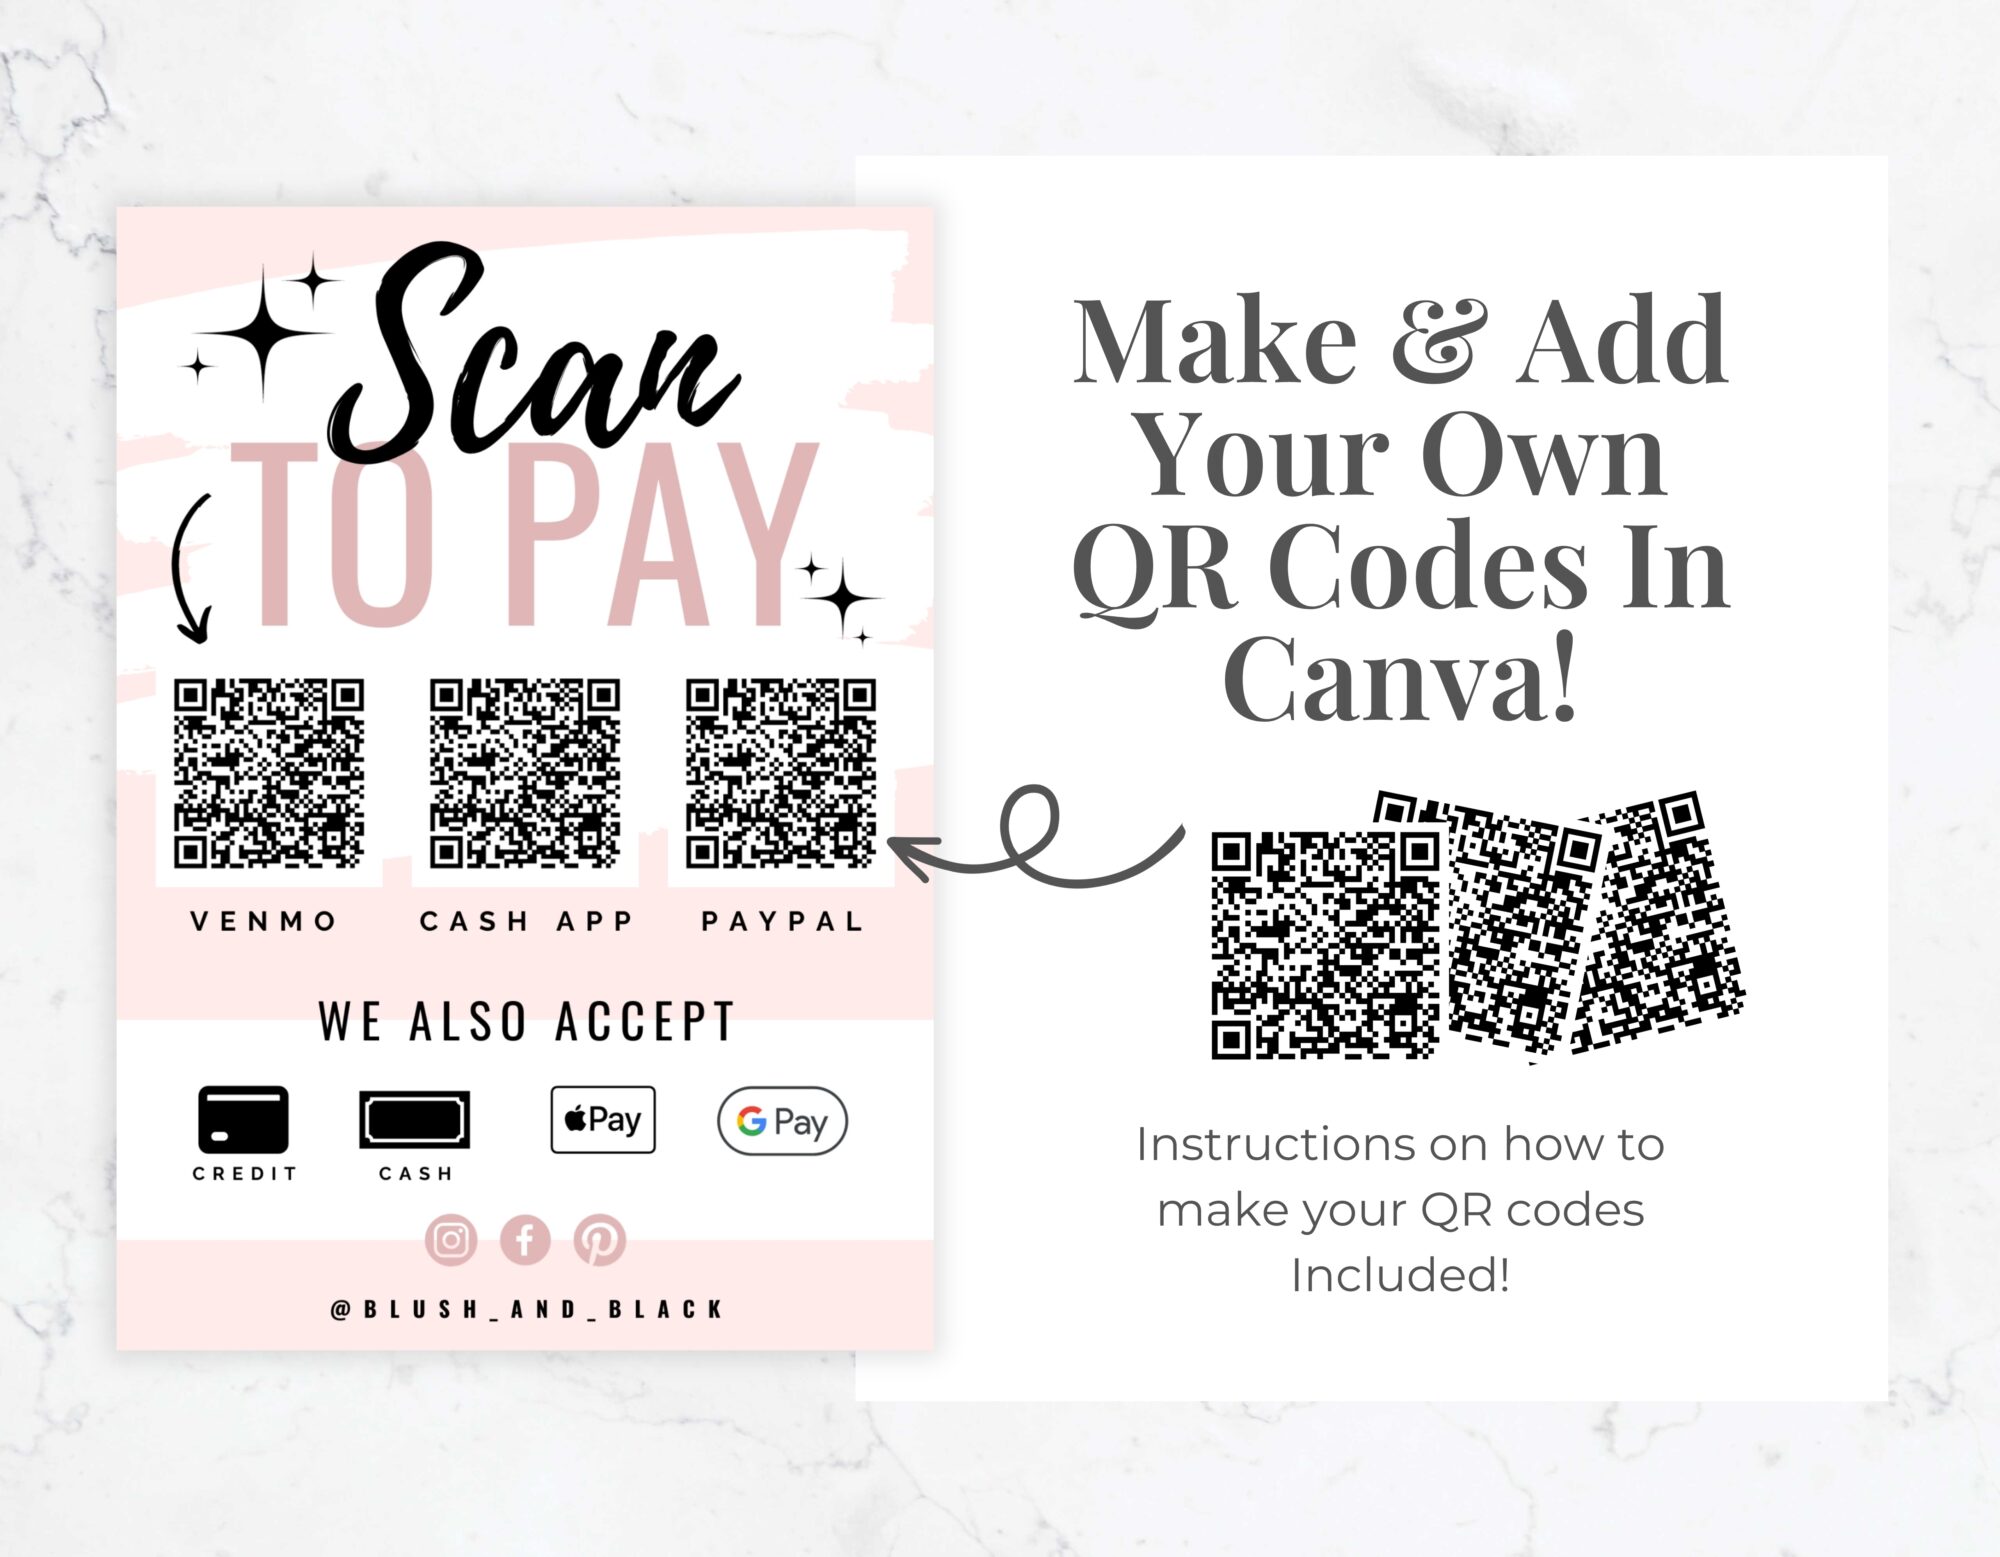 Scan to Pay Card – Blush & Black